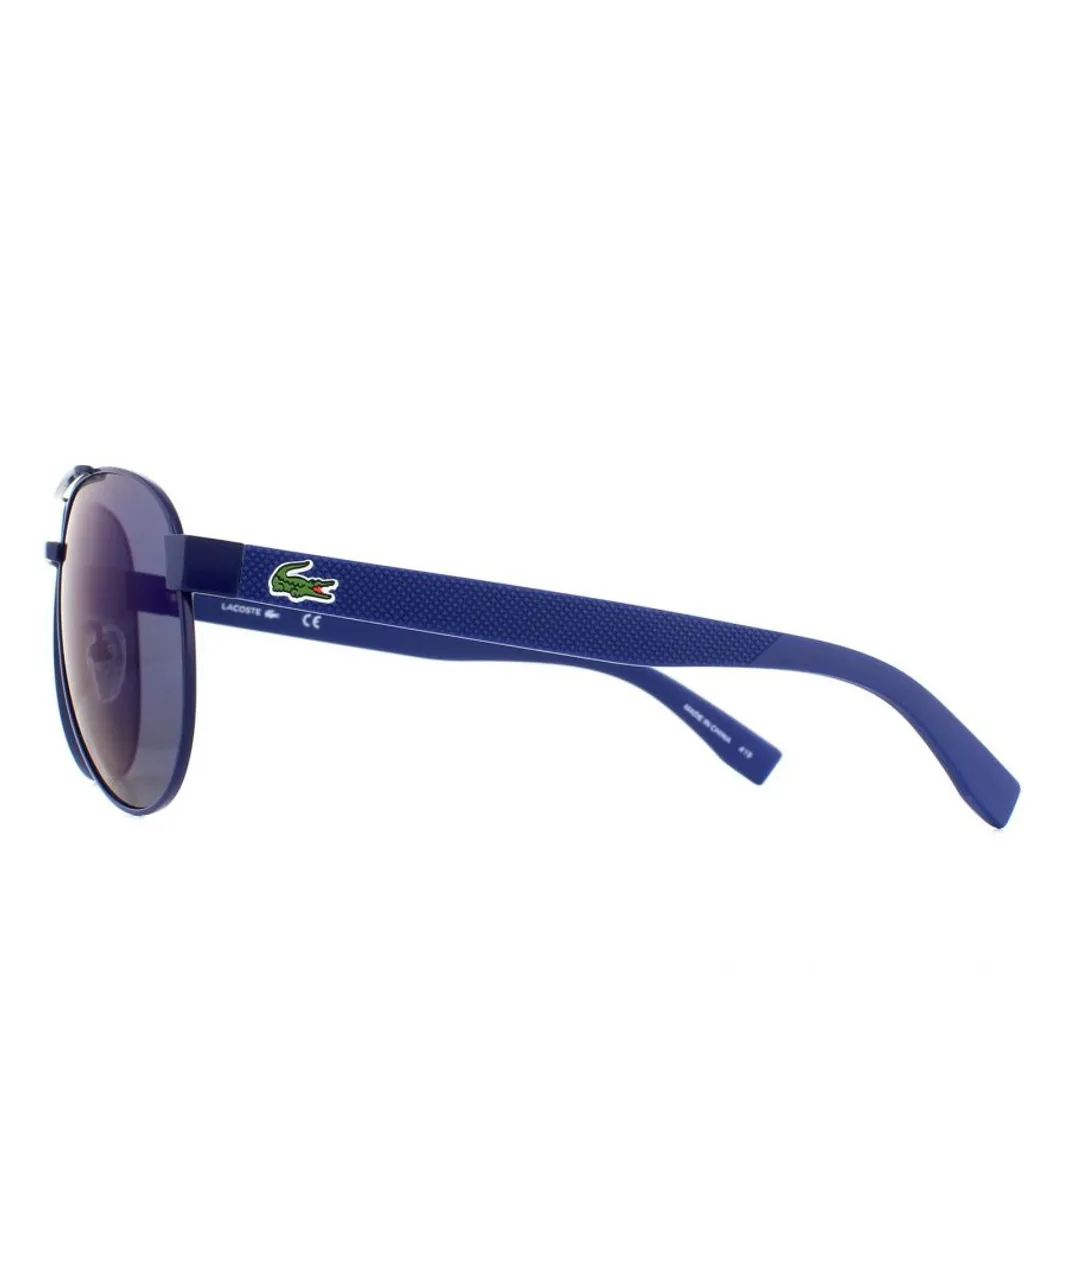 Lacoste Mens Classic Aviator Sunglasses - Blue